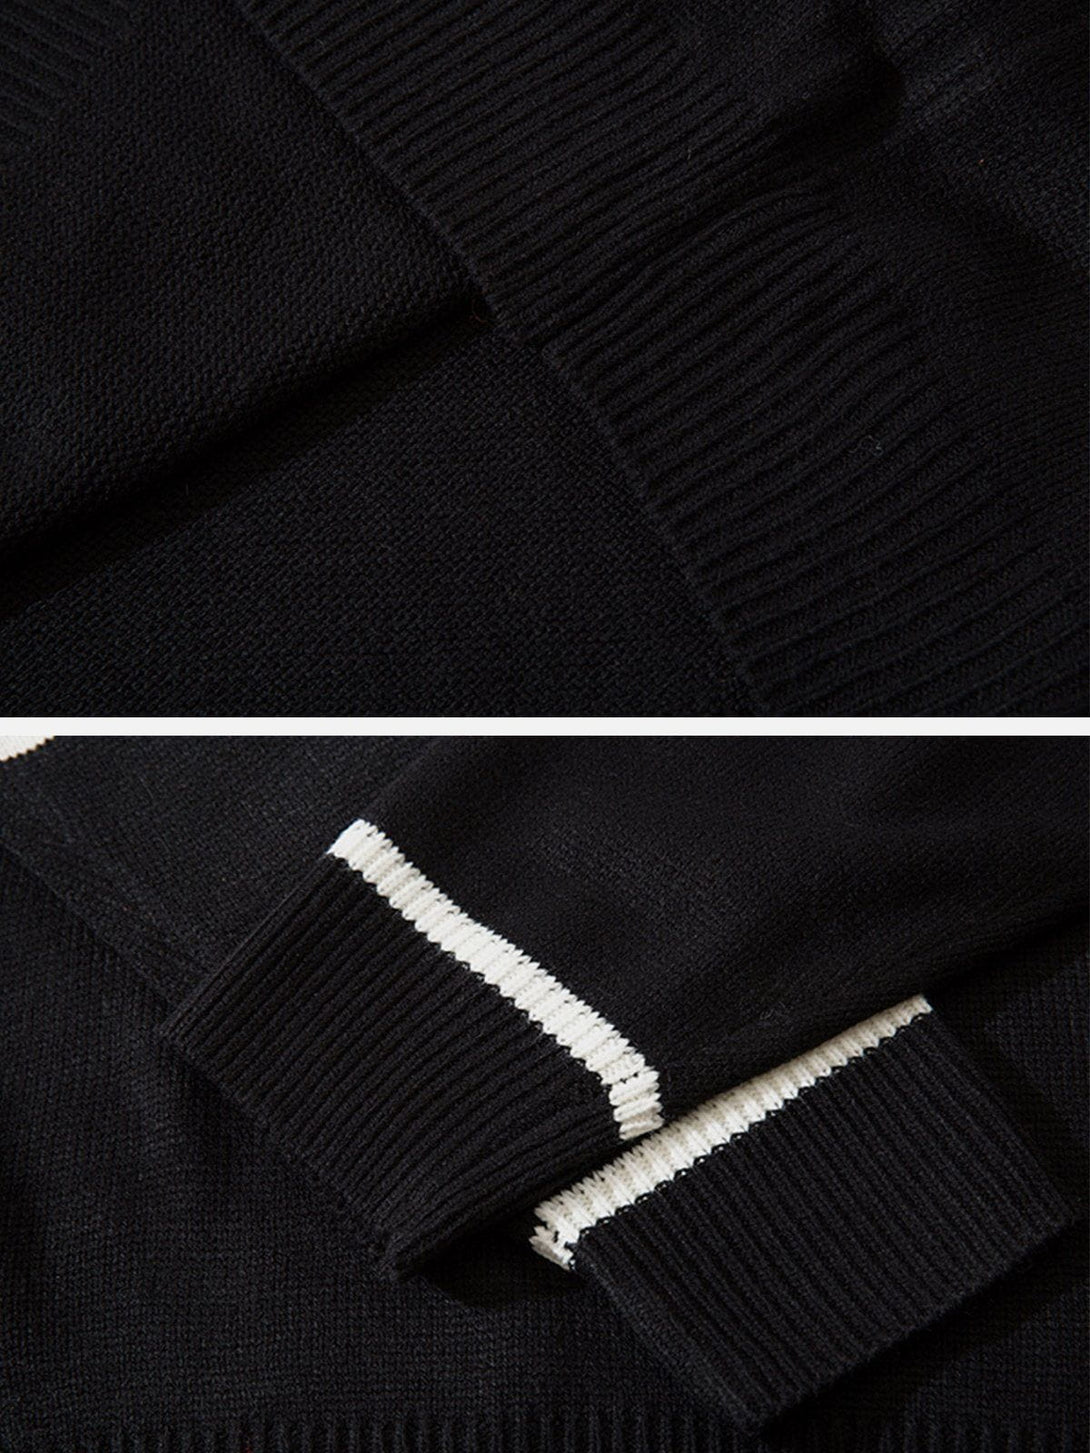 Majesda® - Rabbit Stripe Knit Sweater outfit ideas streetwear fashion